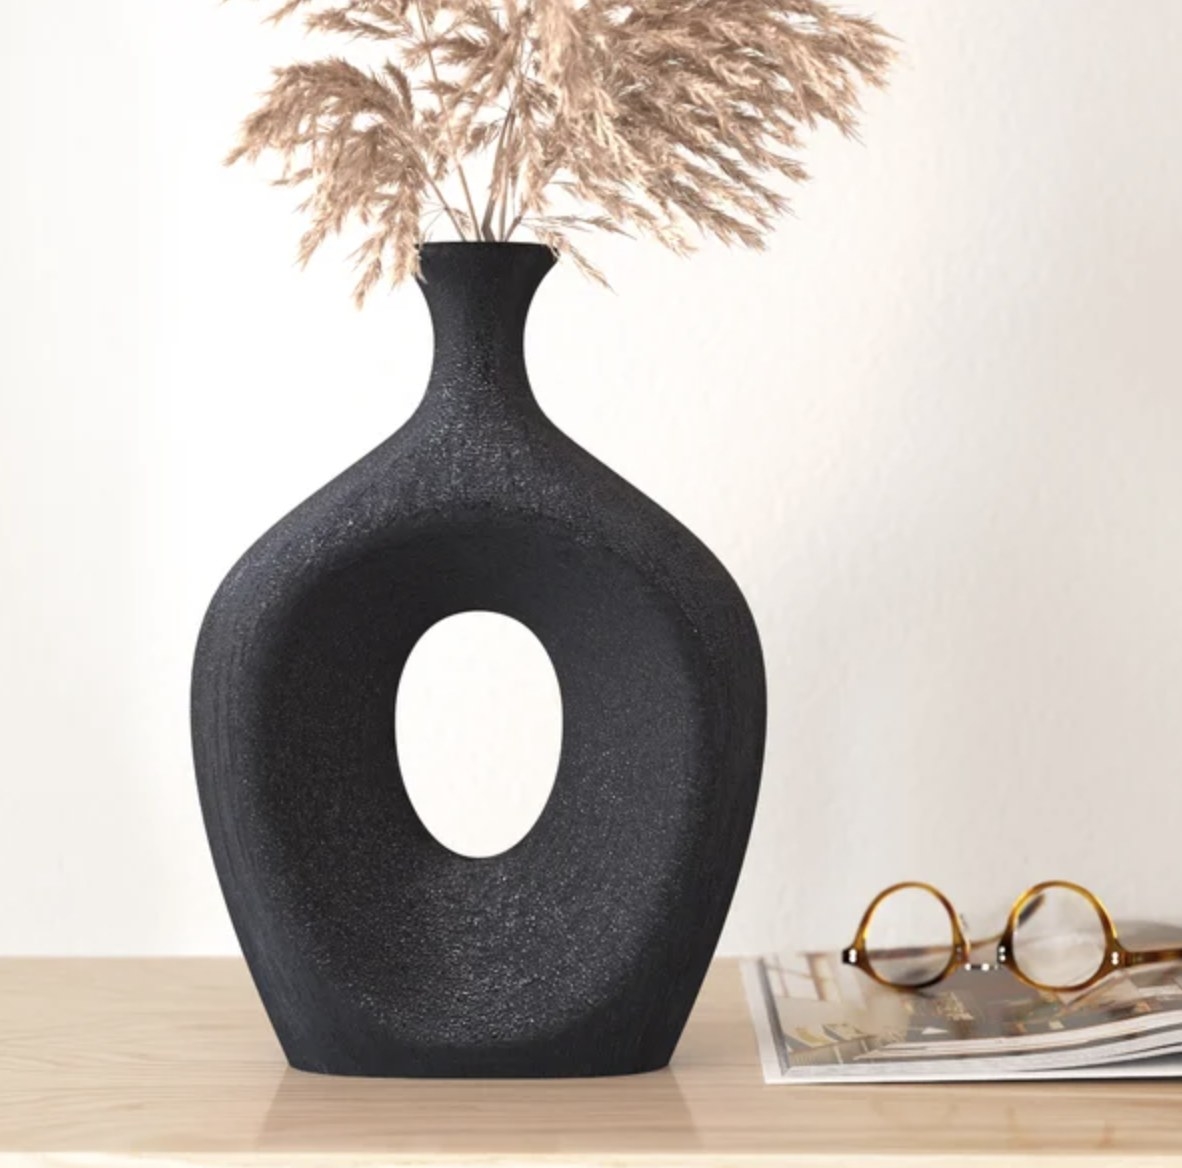 The black vase has inset inner oval